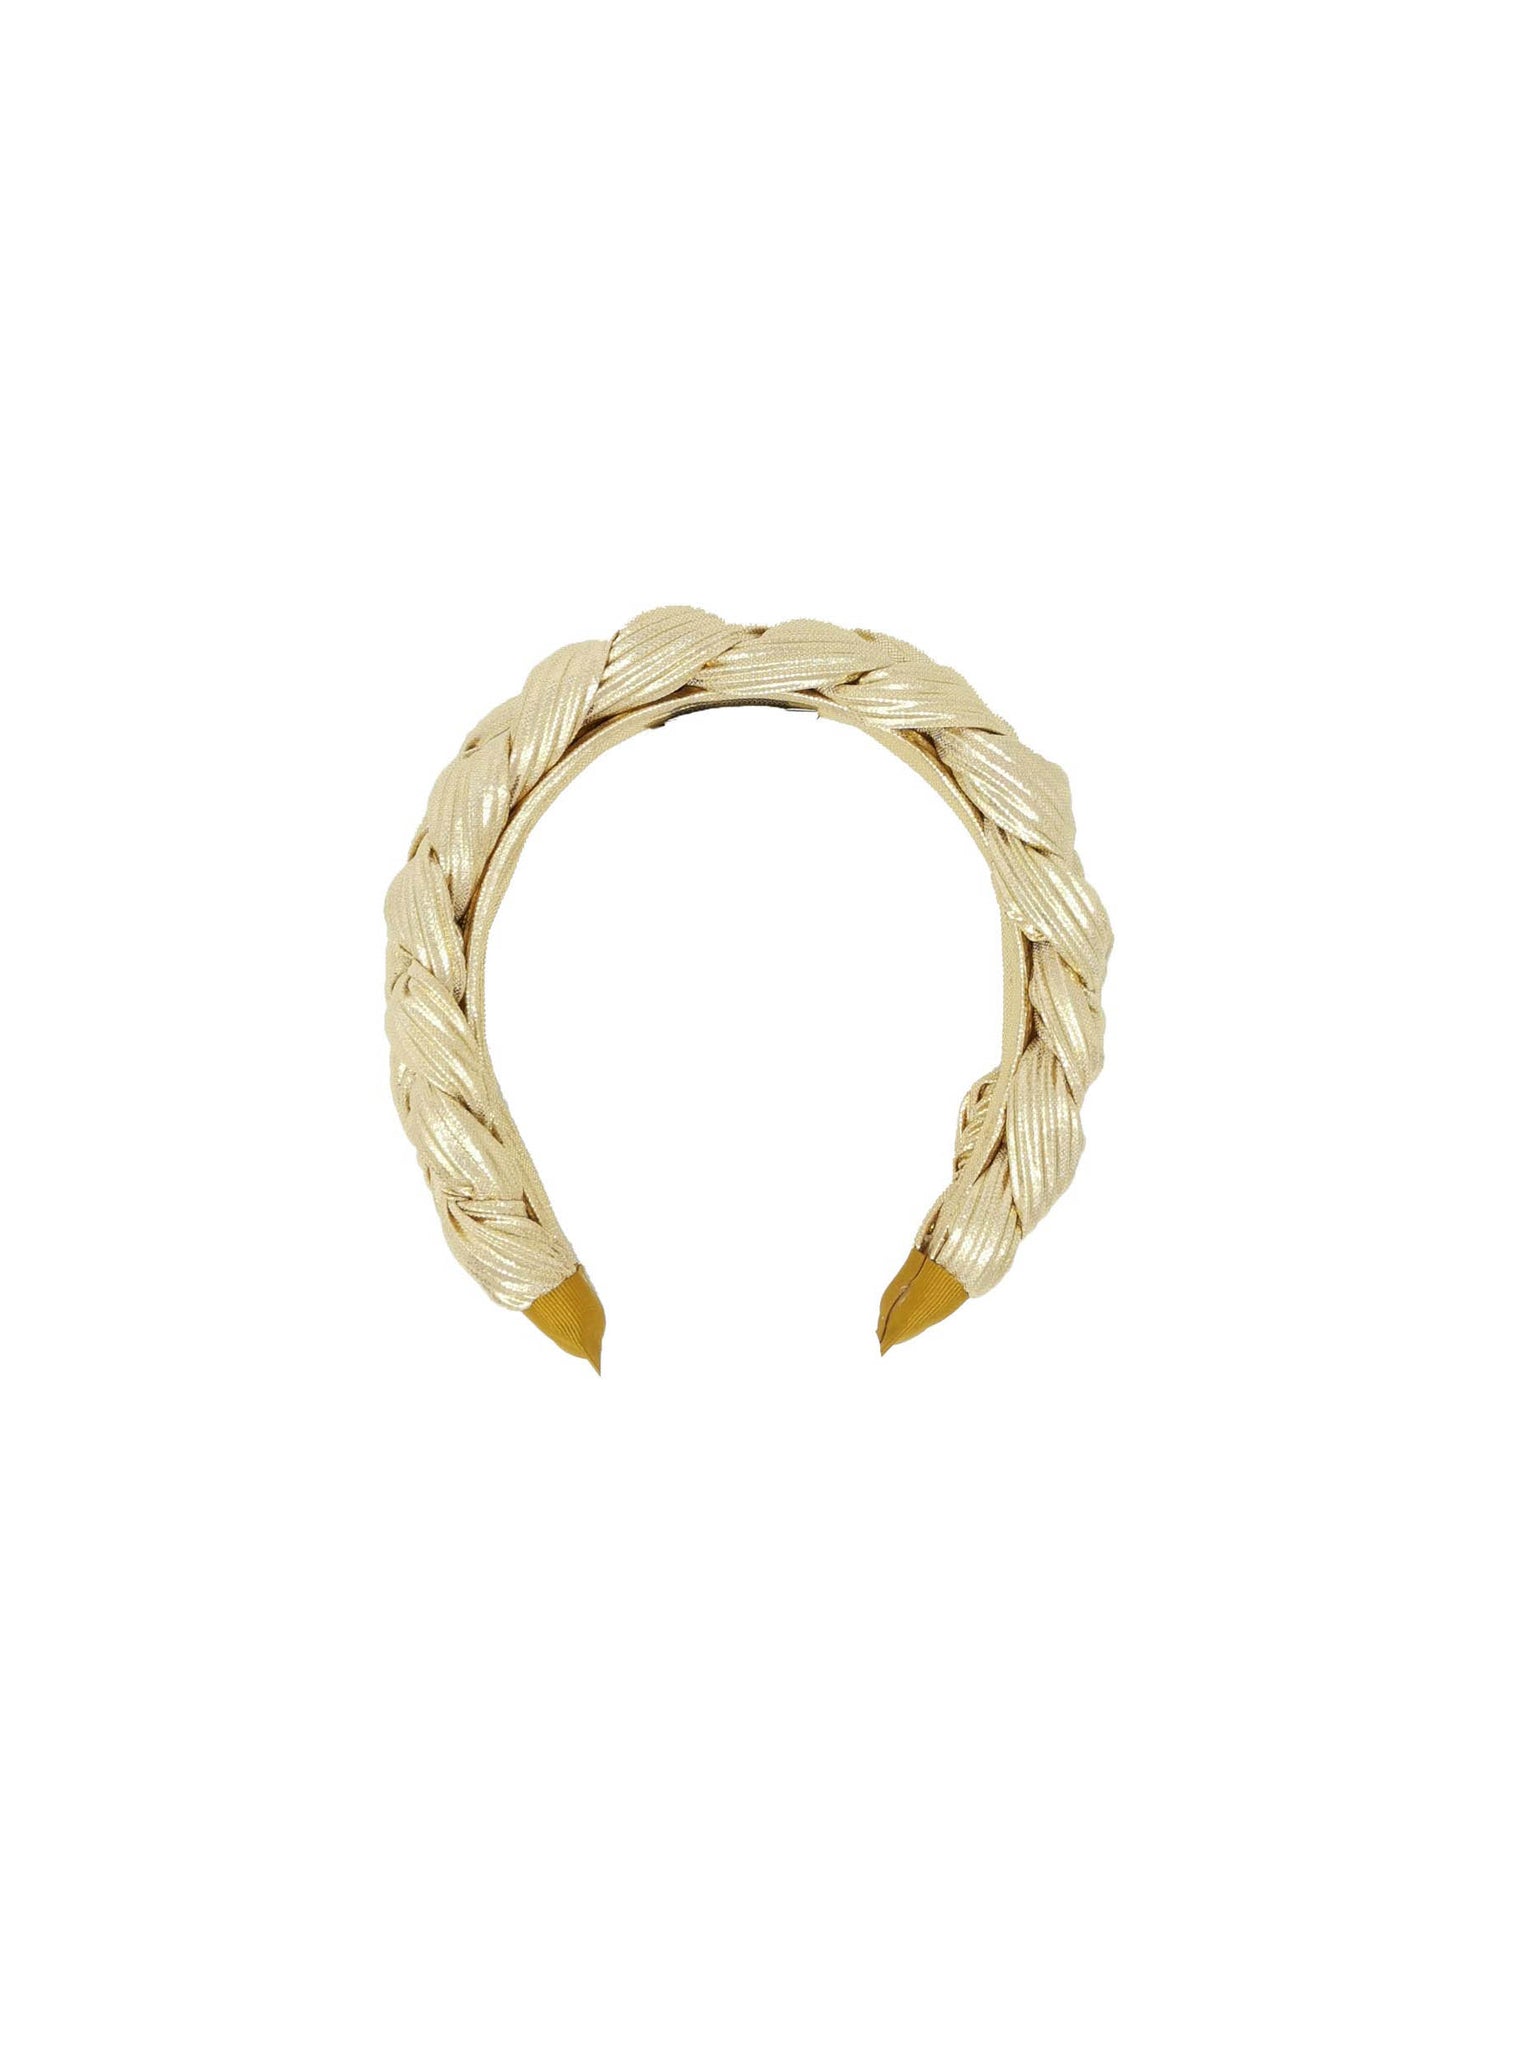 Frida headband in gold pleated fabric